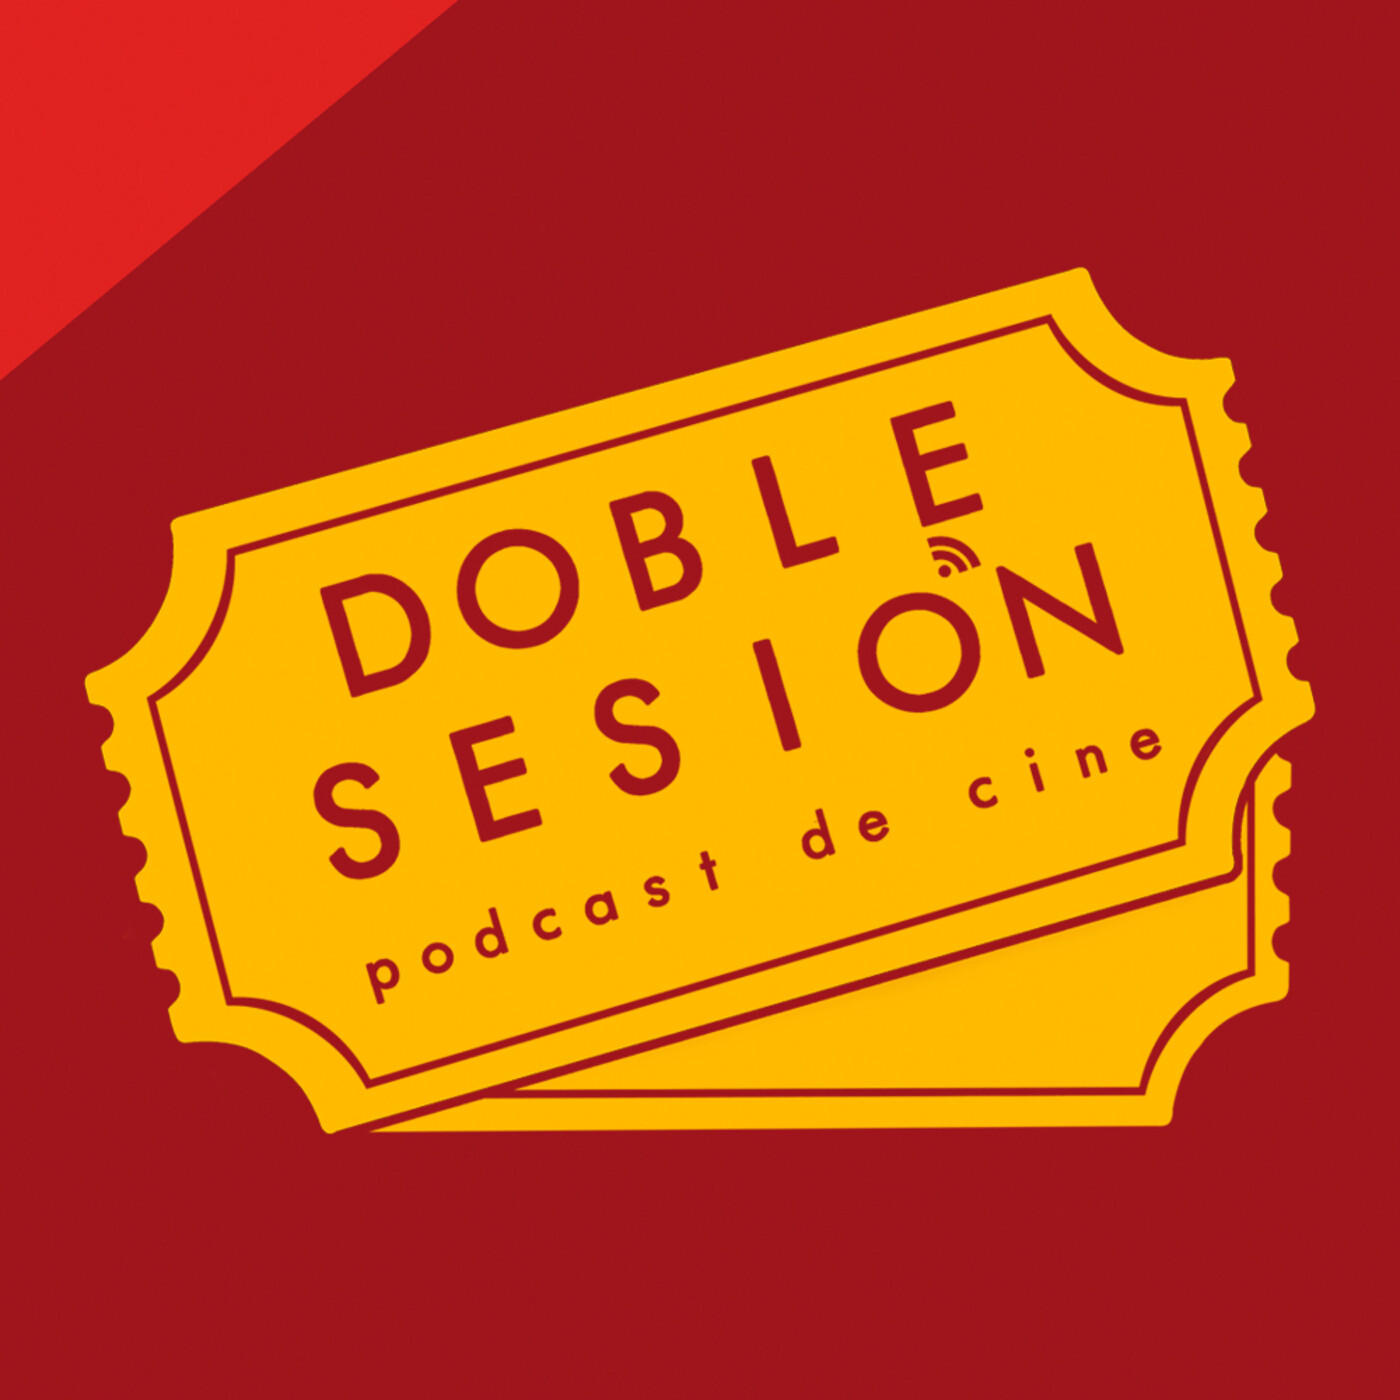 Doble Sesión Podcast de Cine